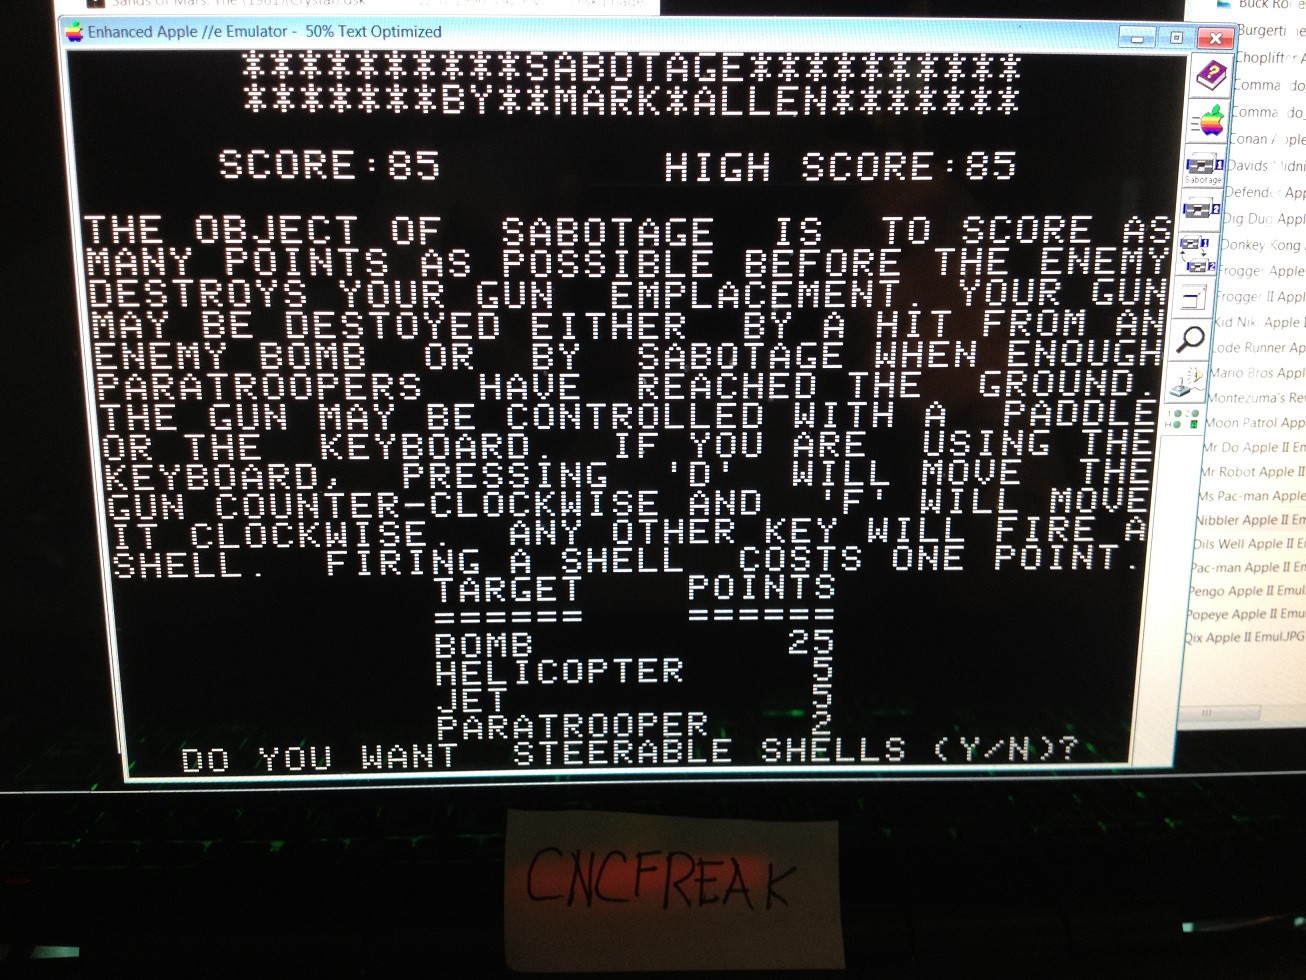 cncfreak: Sabotage (Apple II Emulated) 85 points on 2013-10-16 23:09:37